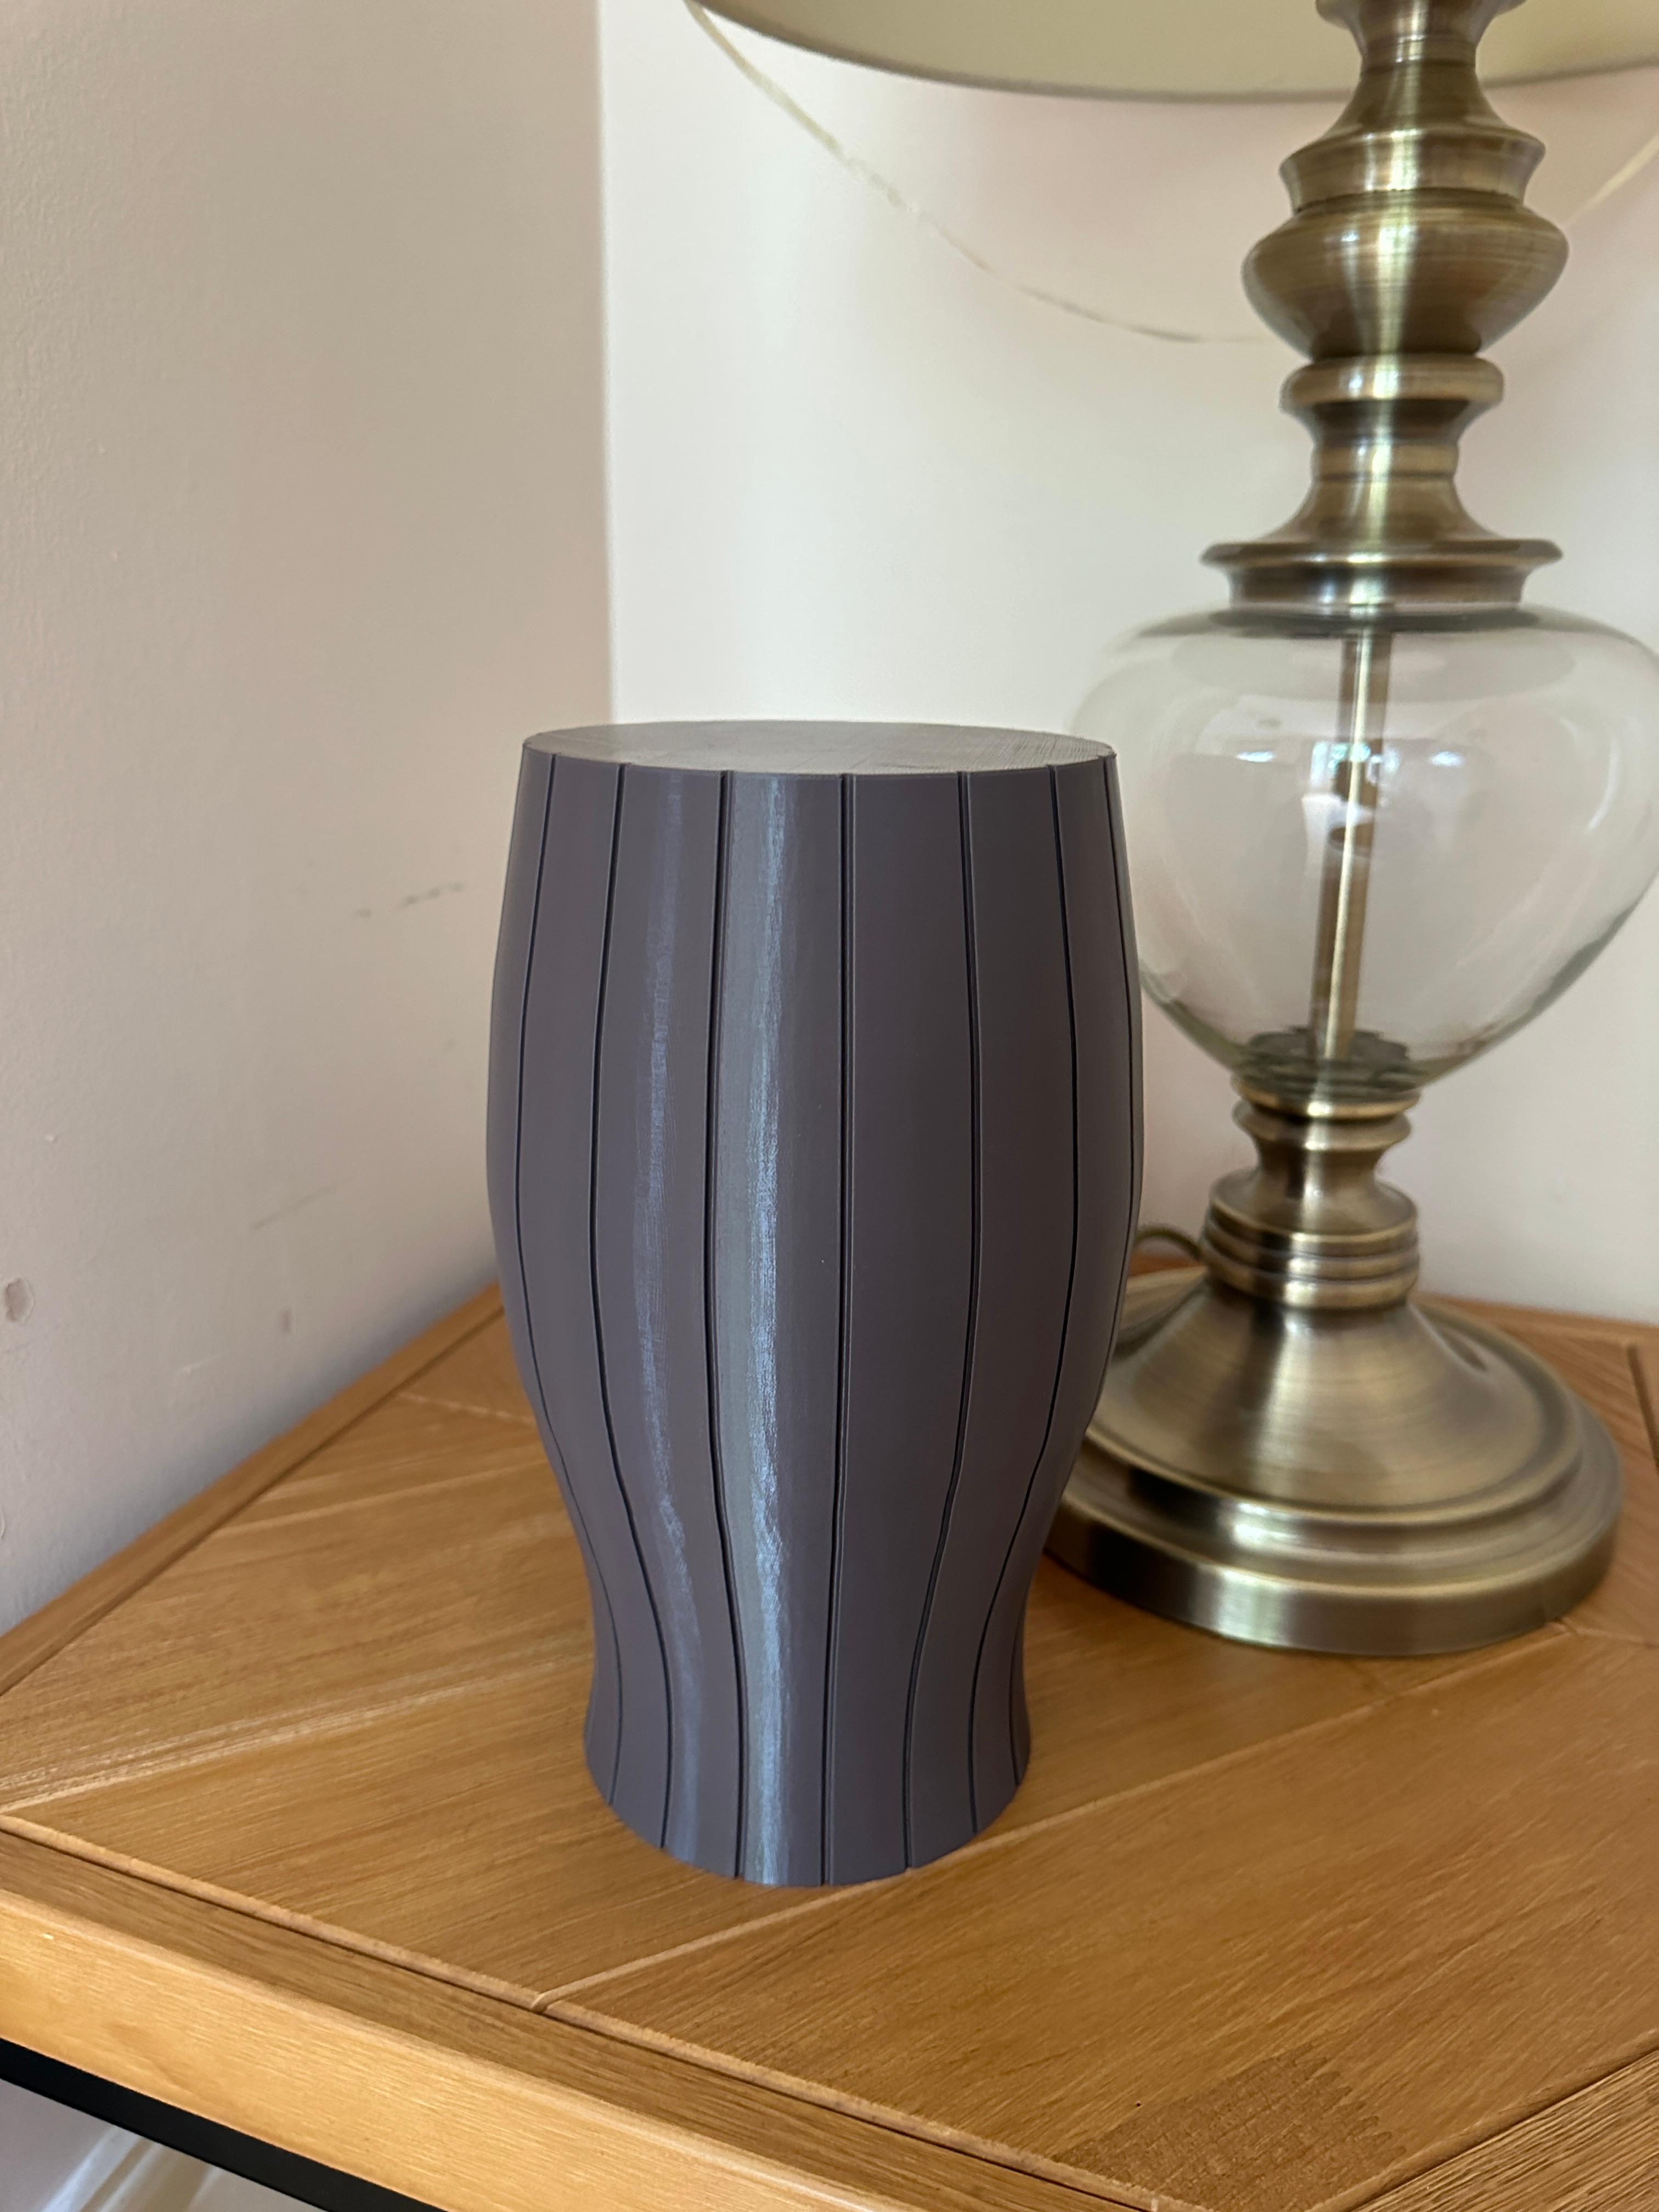 Vase and Drum 2 in 1 3d model